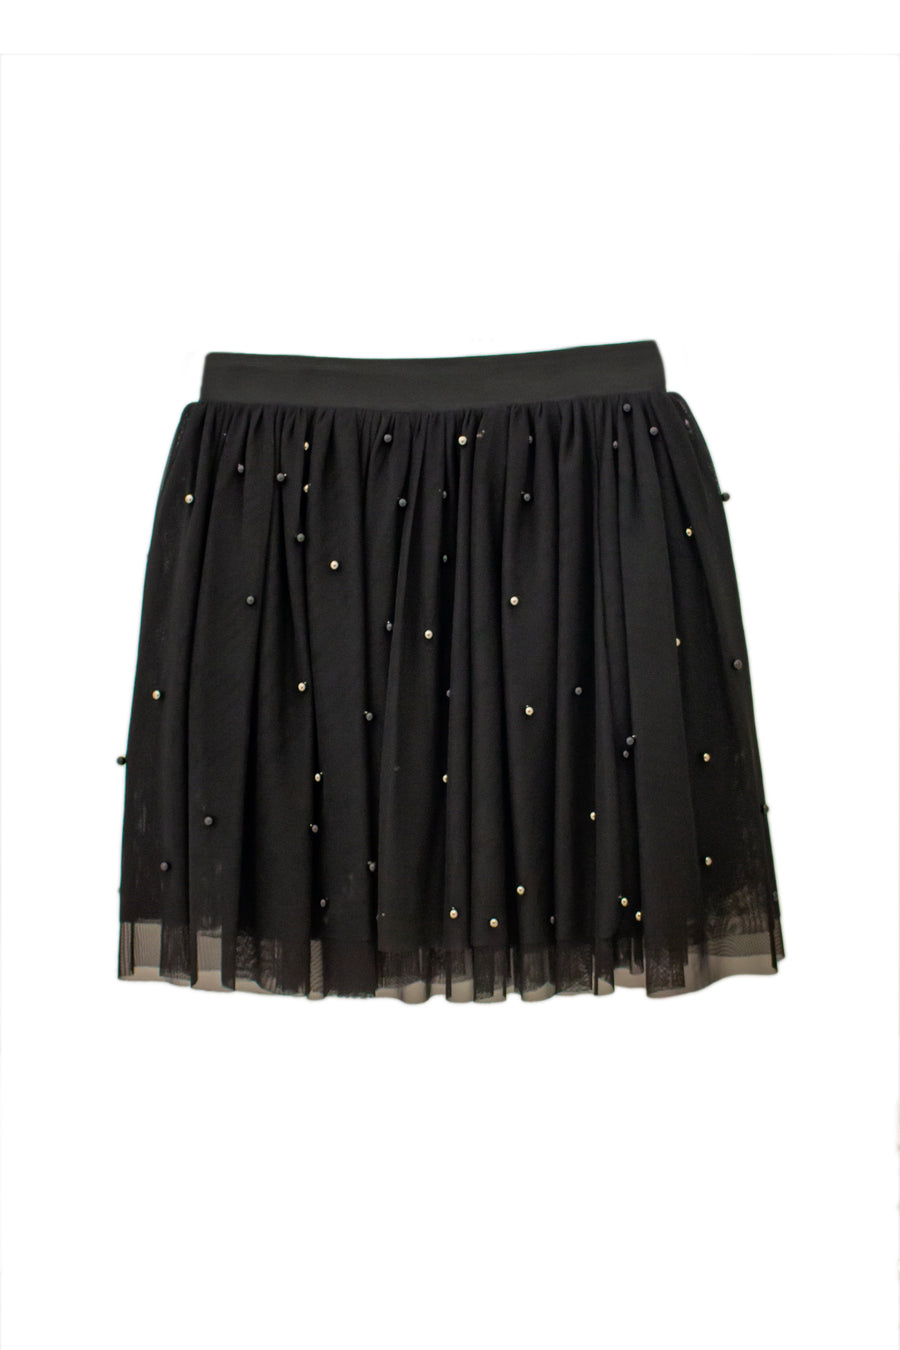 FUN & FUN Black Skirt Chiffon with Pearl Detail